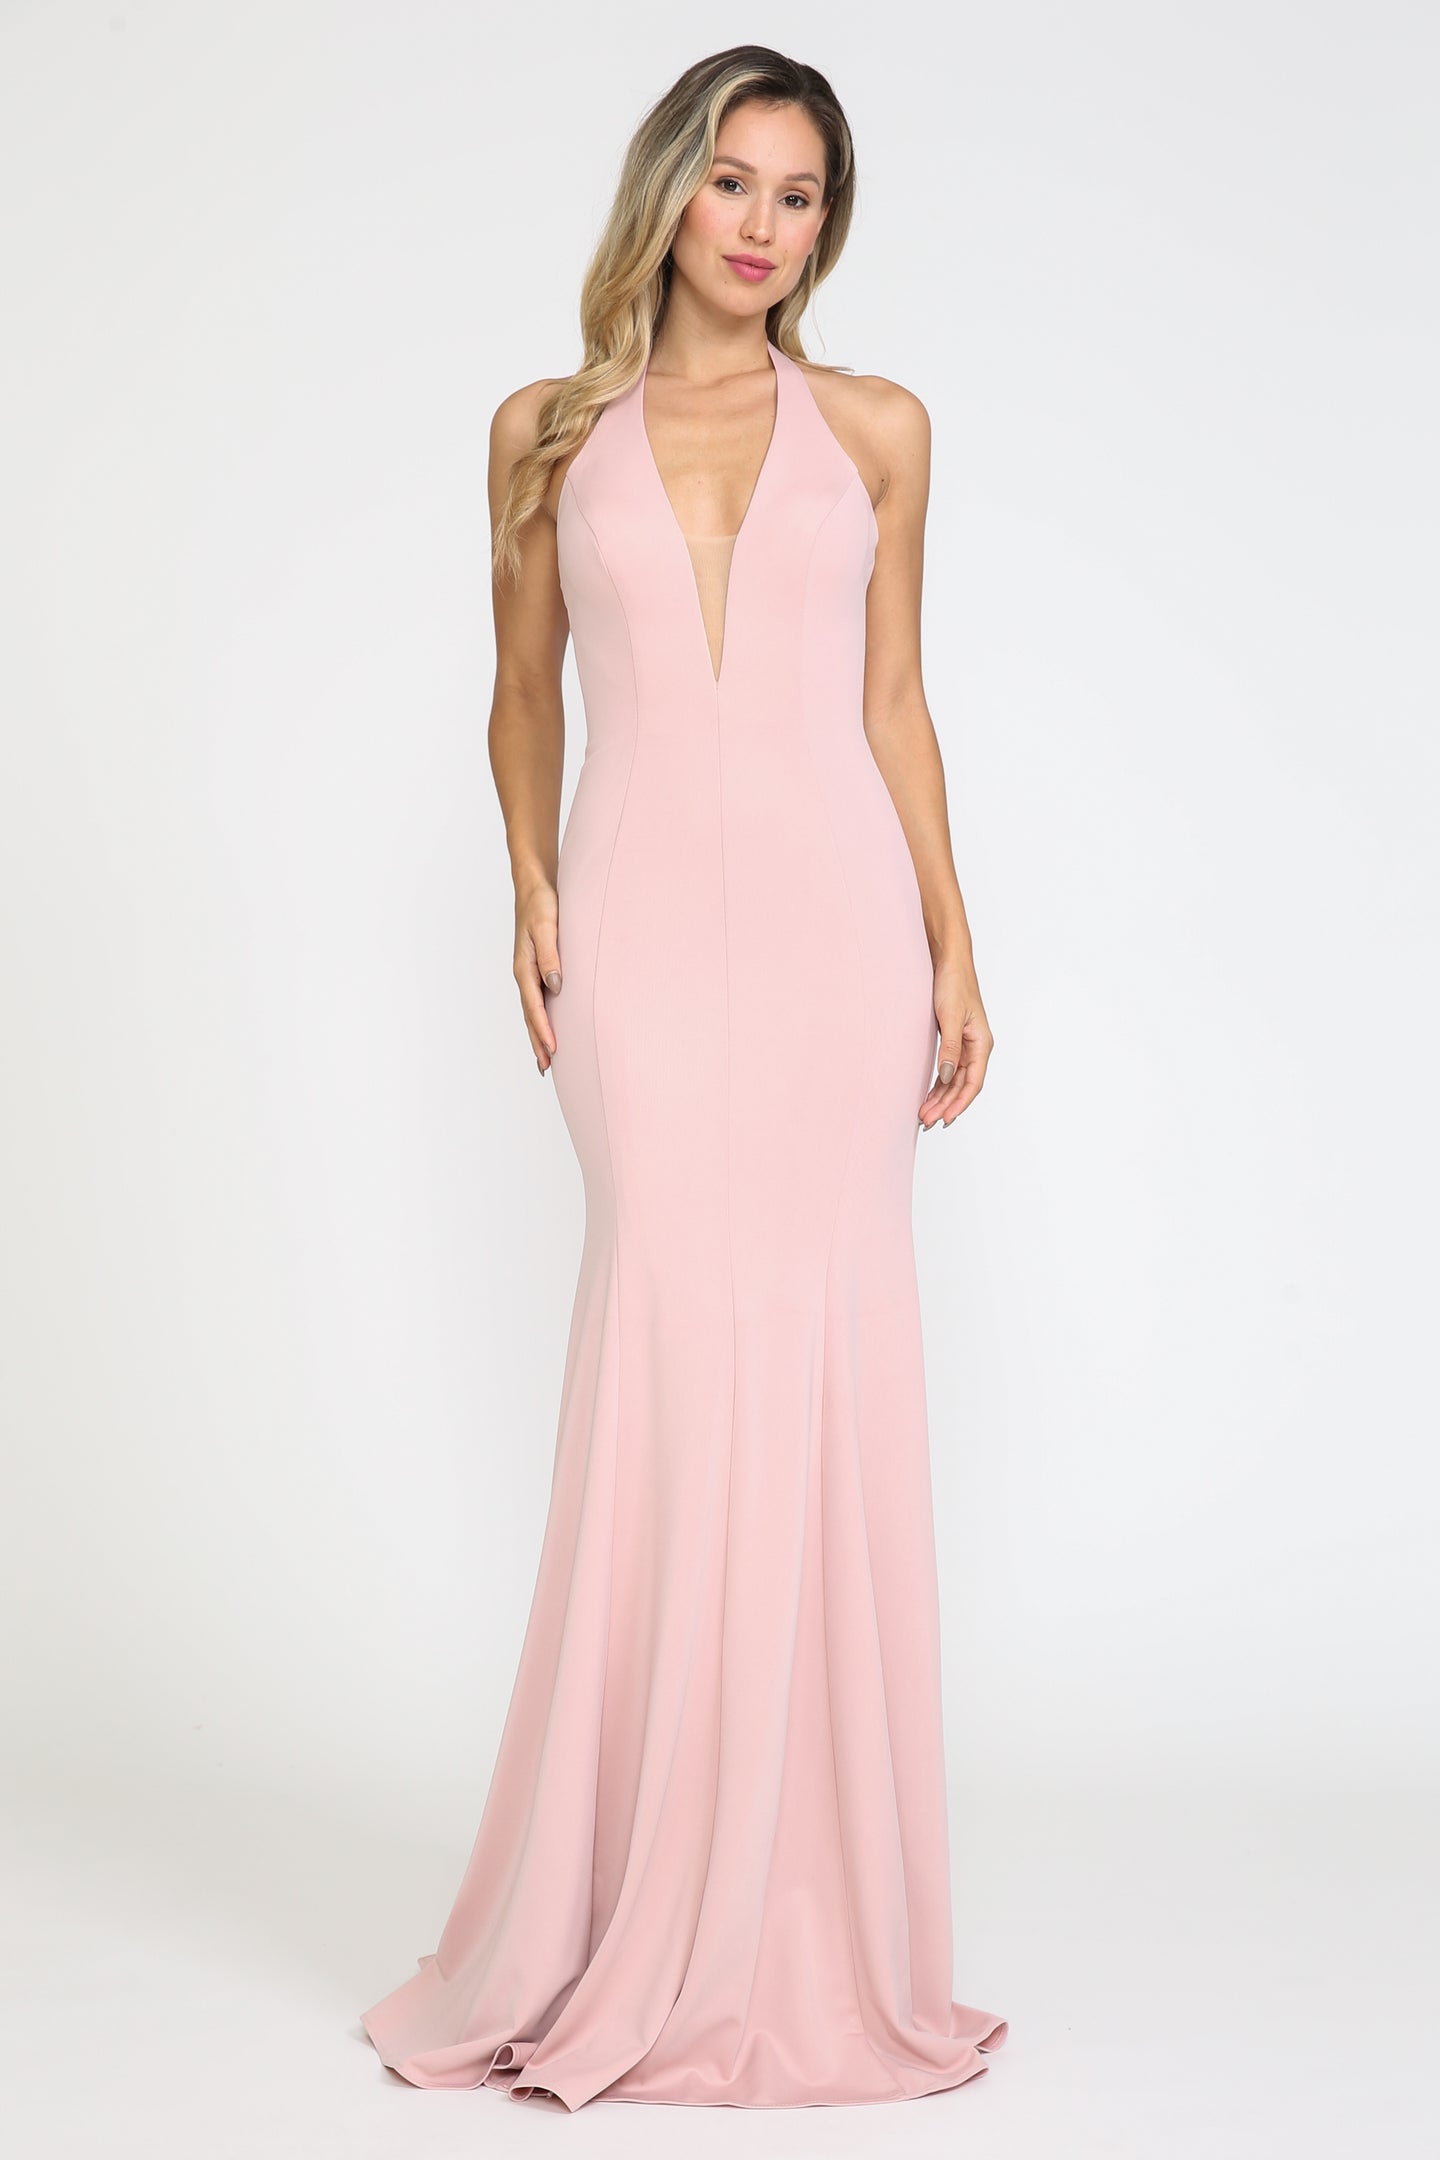 Halter Simple Gown - LAY8262 - DUSTY ROSE/BLUSH - LA Merchandise